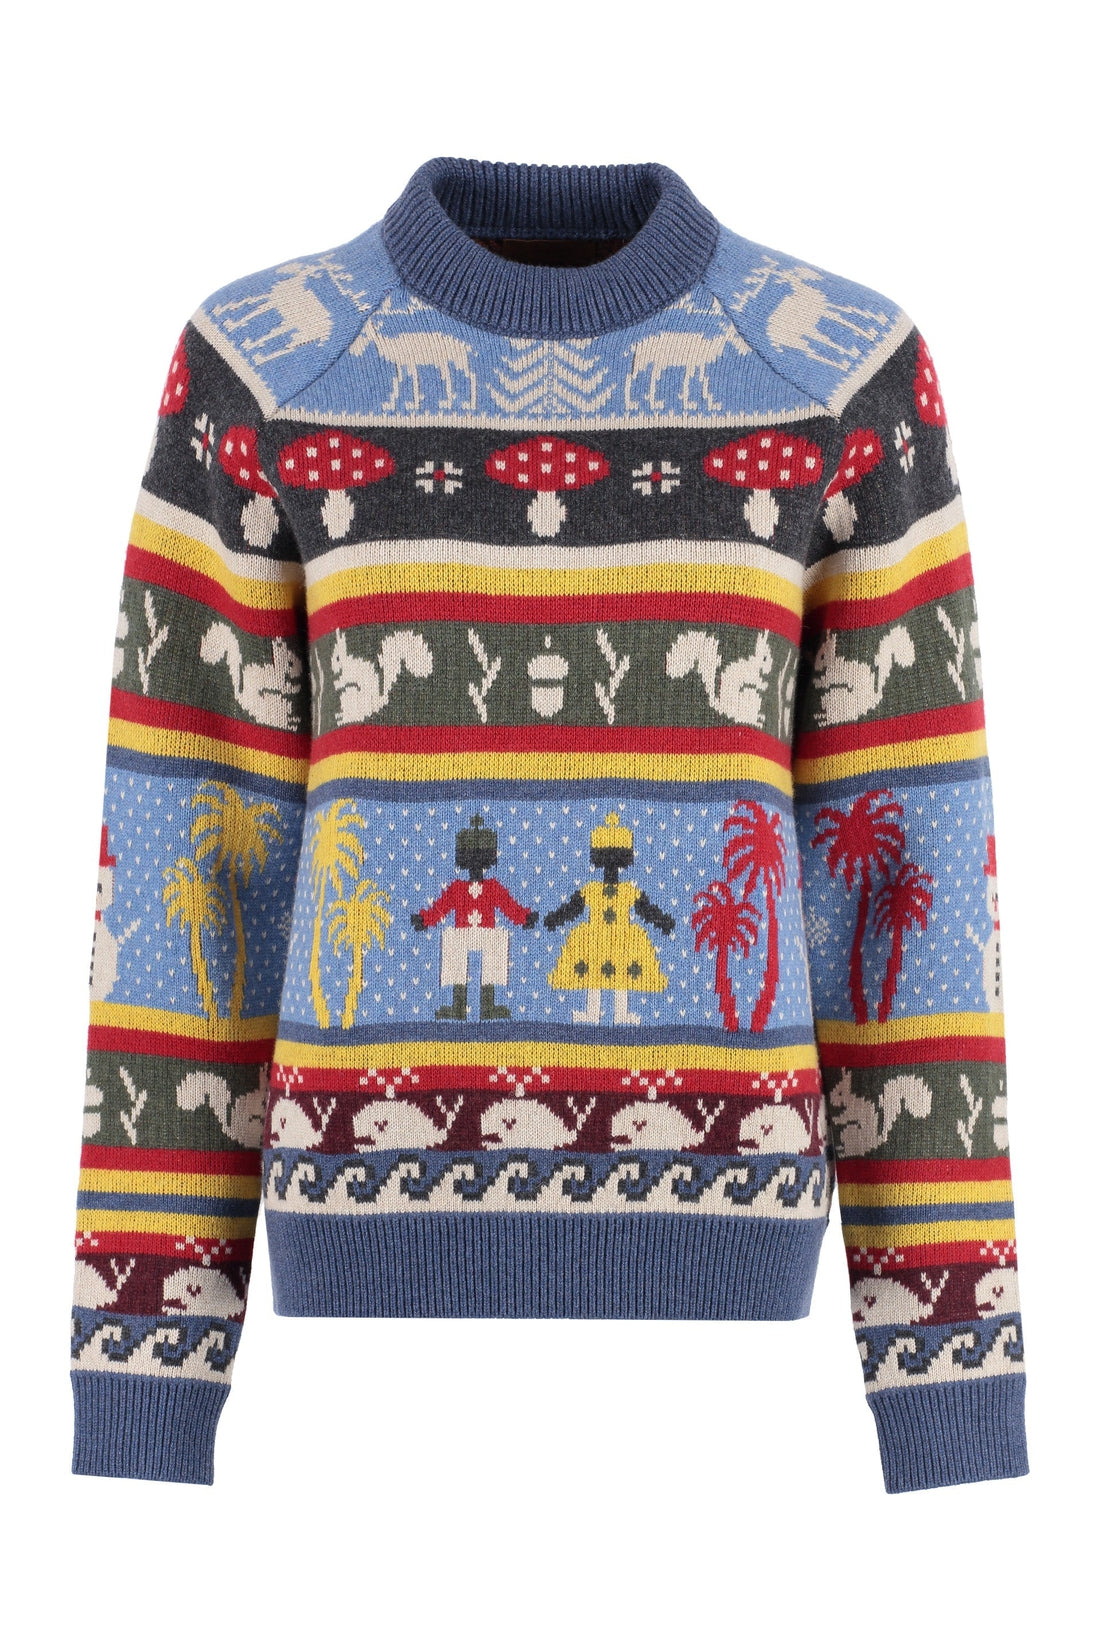 Alanui-OUTLET-SALE-Winter Friends crew-neck sweater-ARCHIVIST